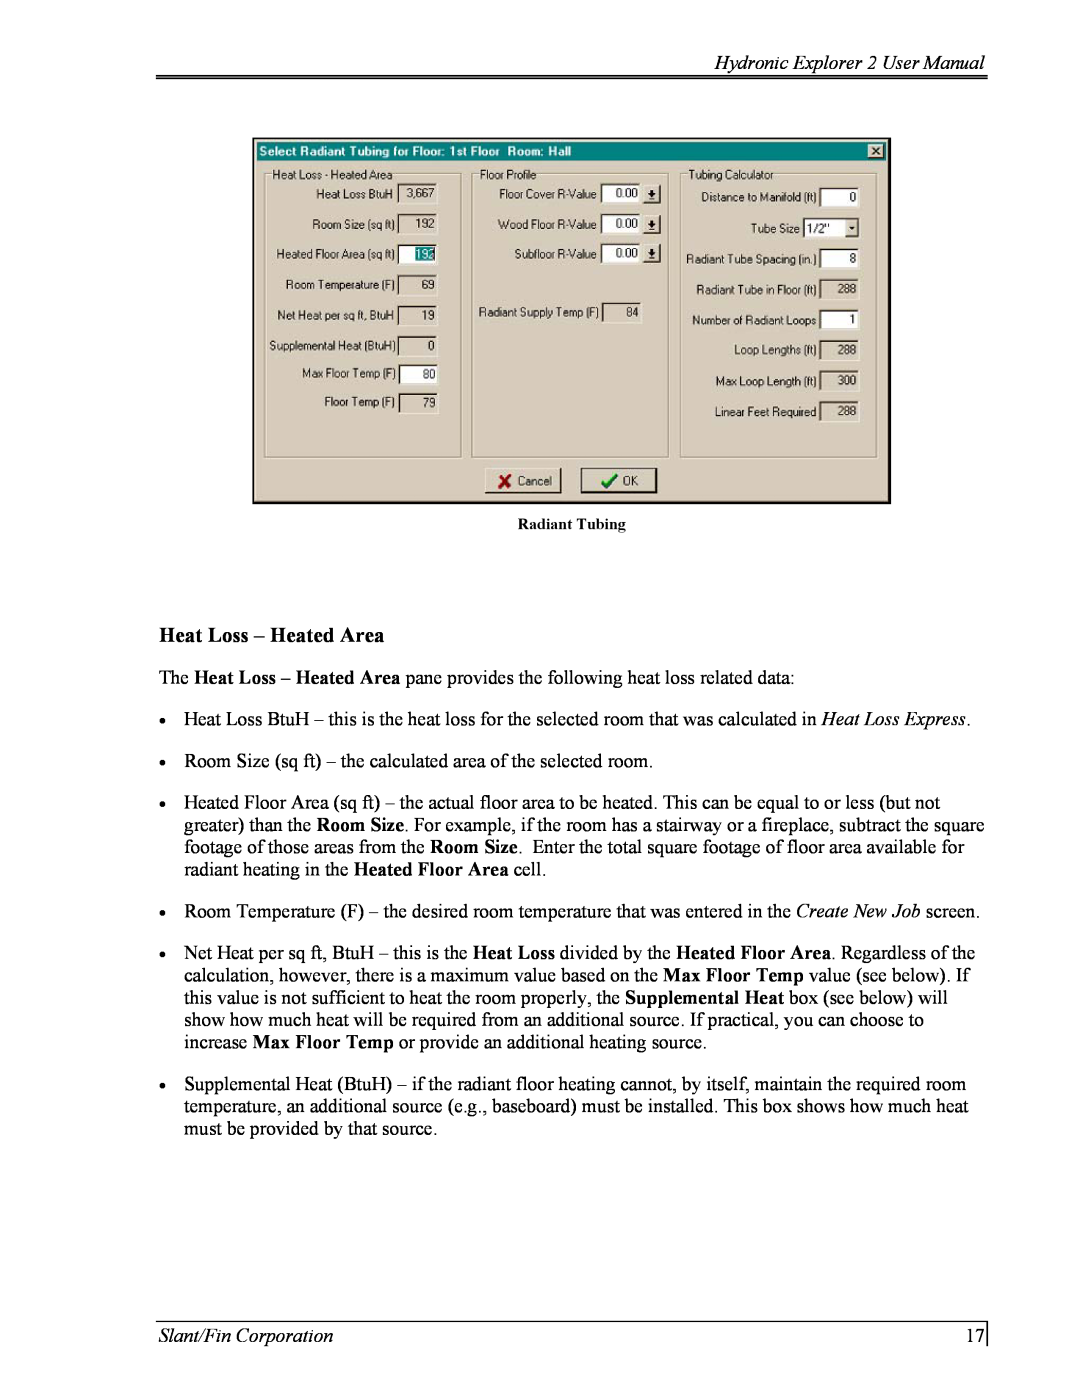 Slant/Fin Hydronic Explorer 2 user manual Heat Loss - Heated Area, Slant/Fin Corporation 